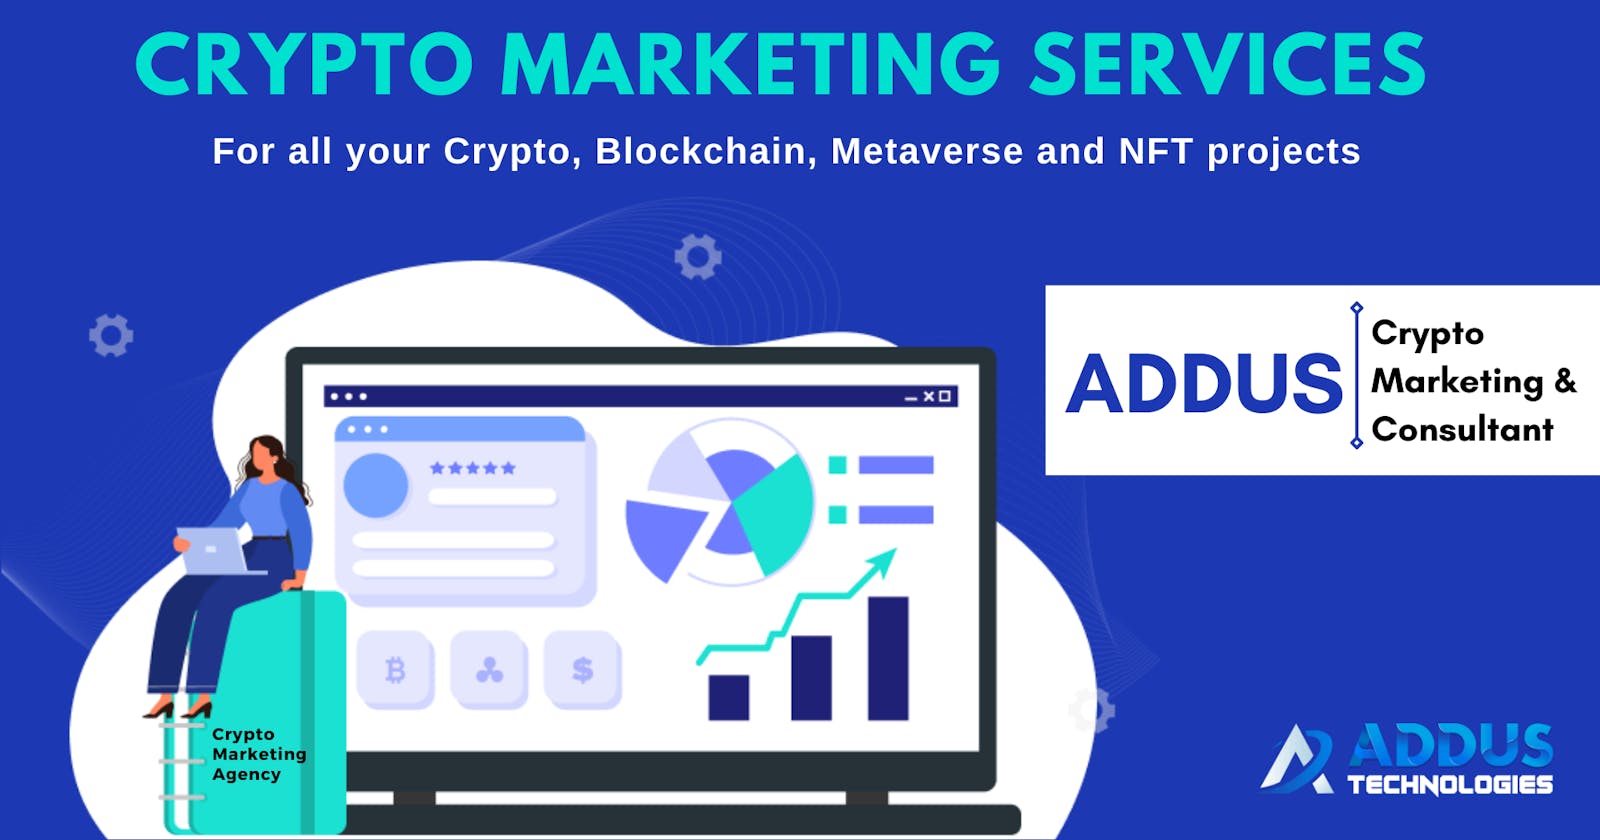 Crypto Marketing Agency- Addus Technologies